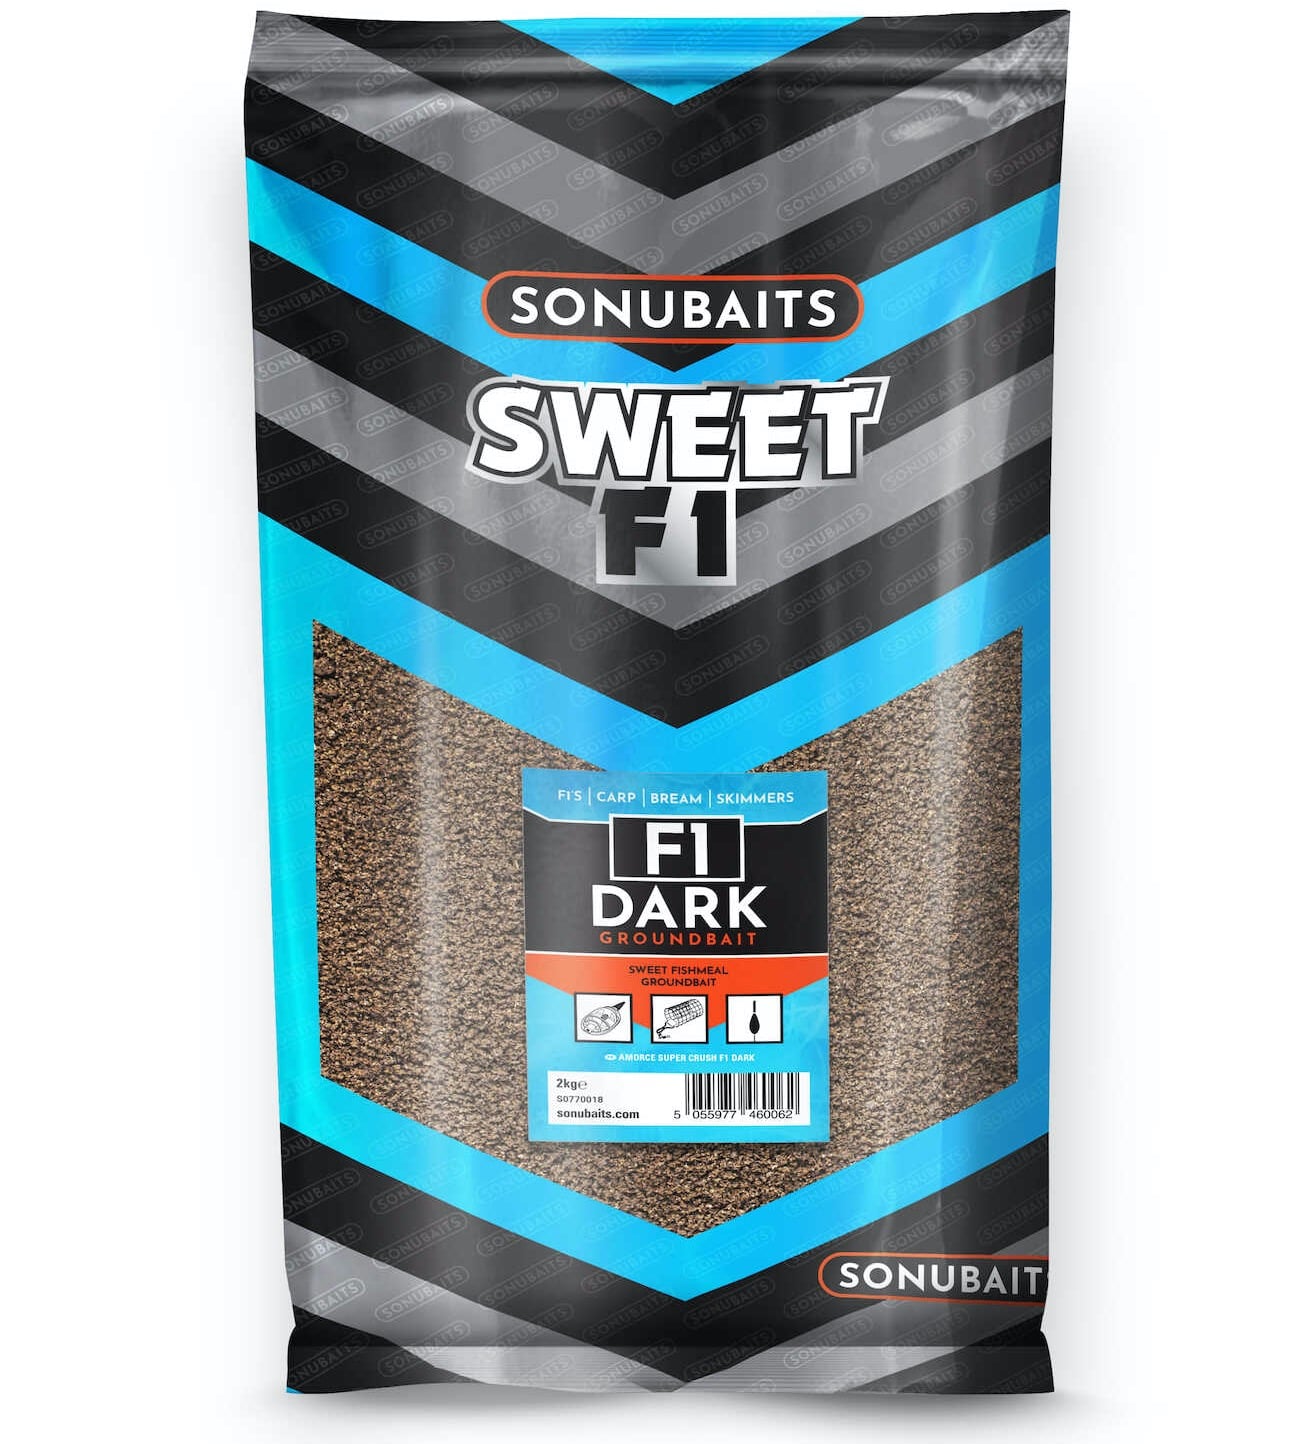 Sonubaits Sweet F1 Dark